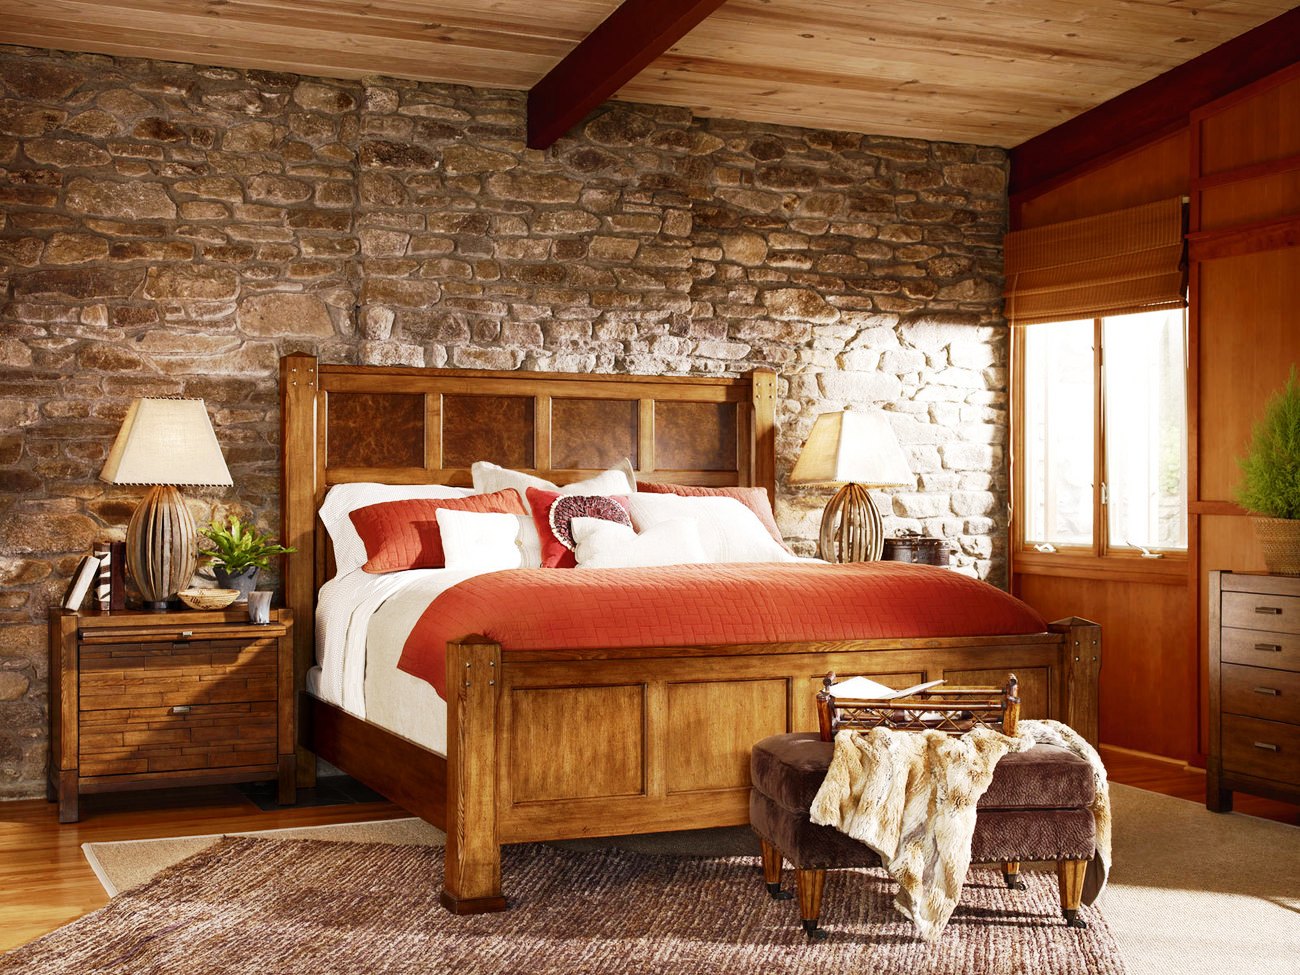 25 Rustic Bedroom Ideas to Try - Instaloverz